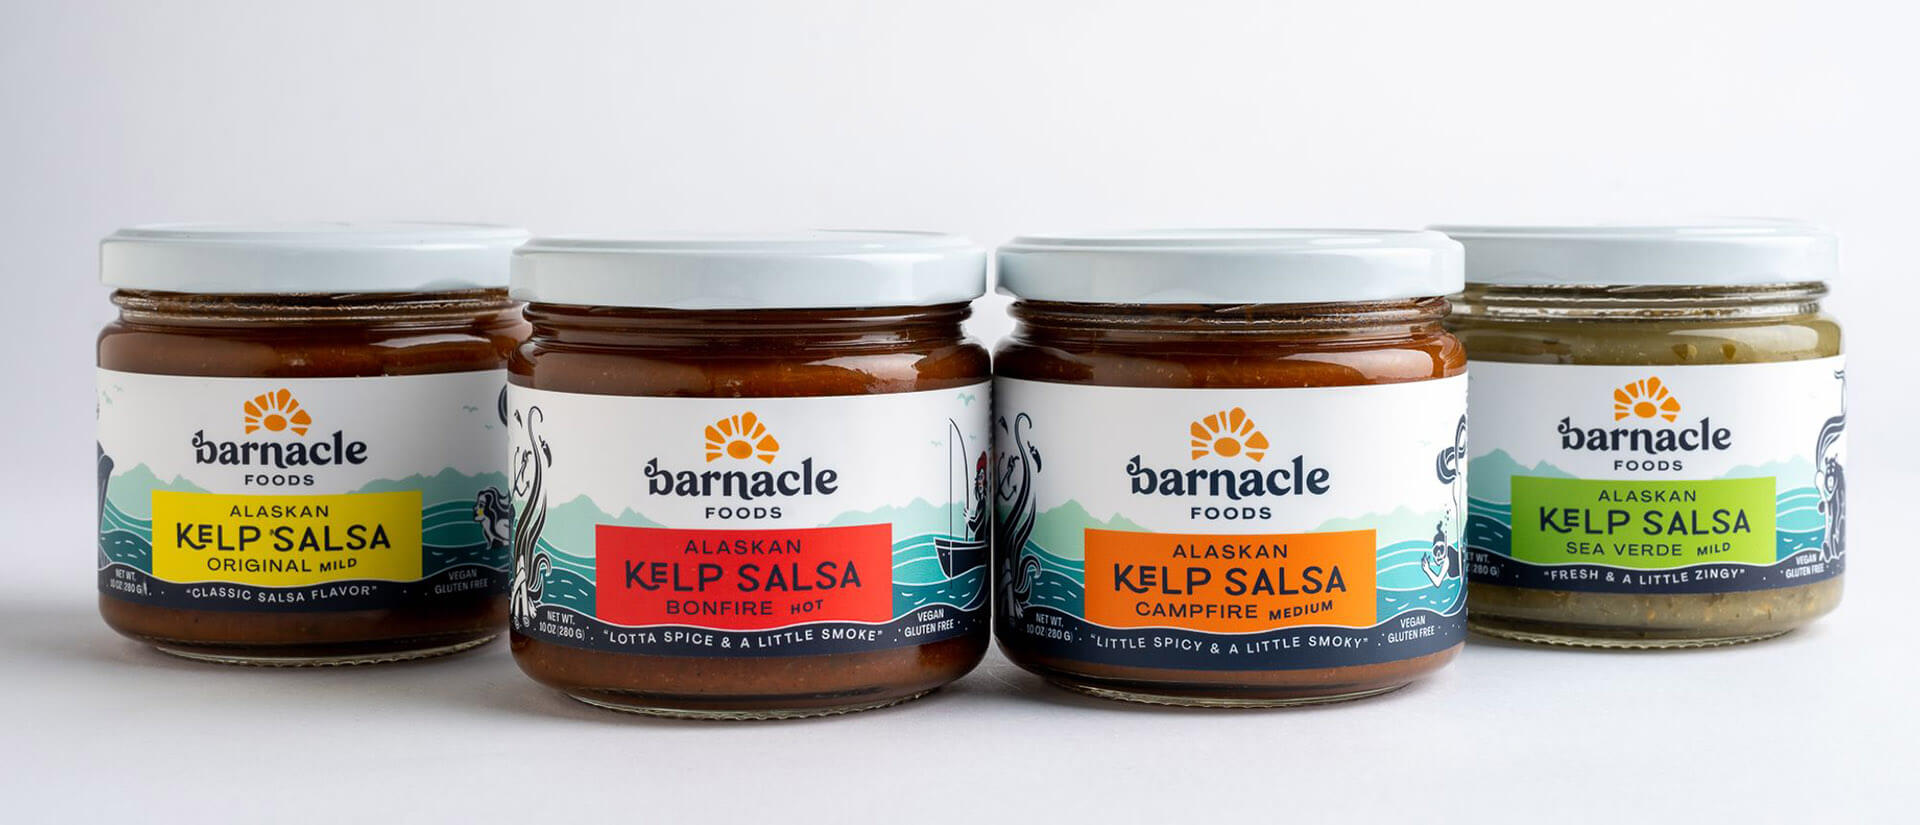 Barnacle酱料和调味料包装设计